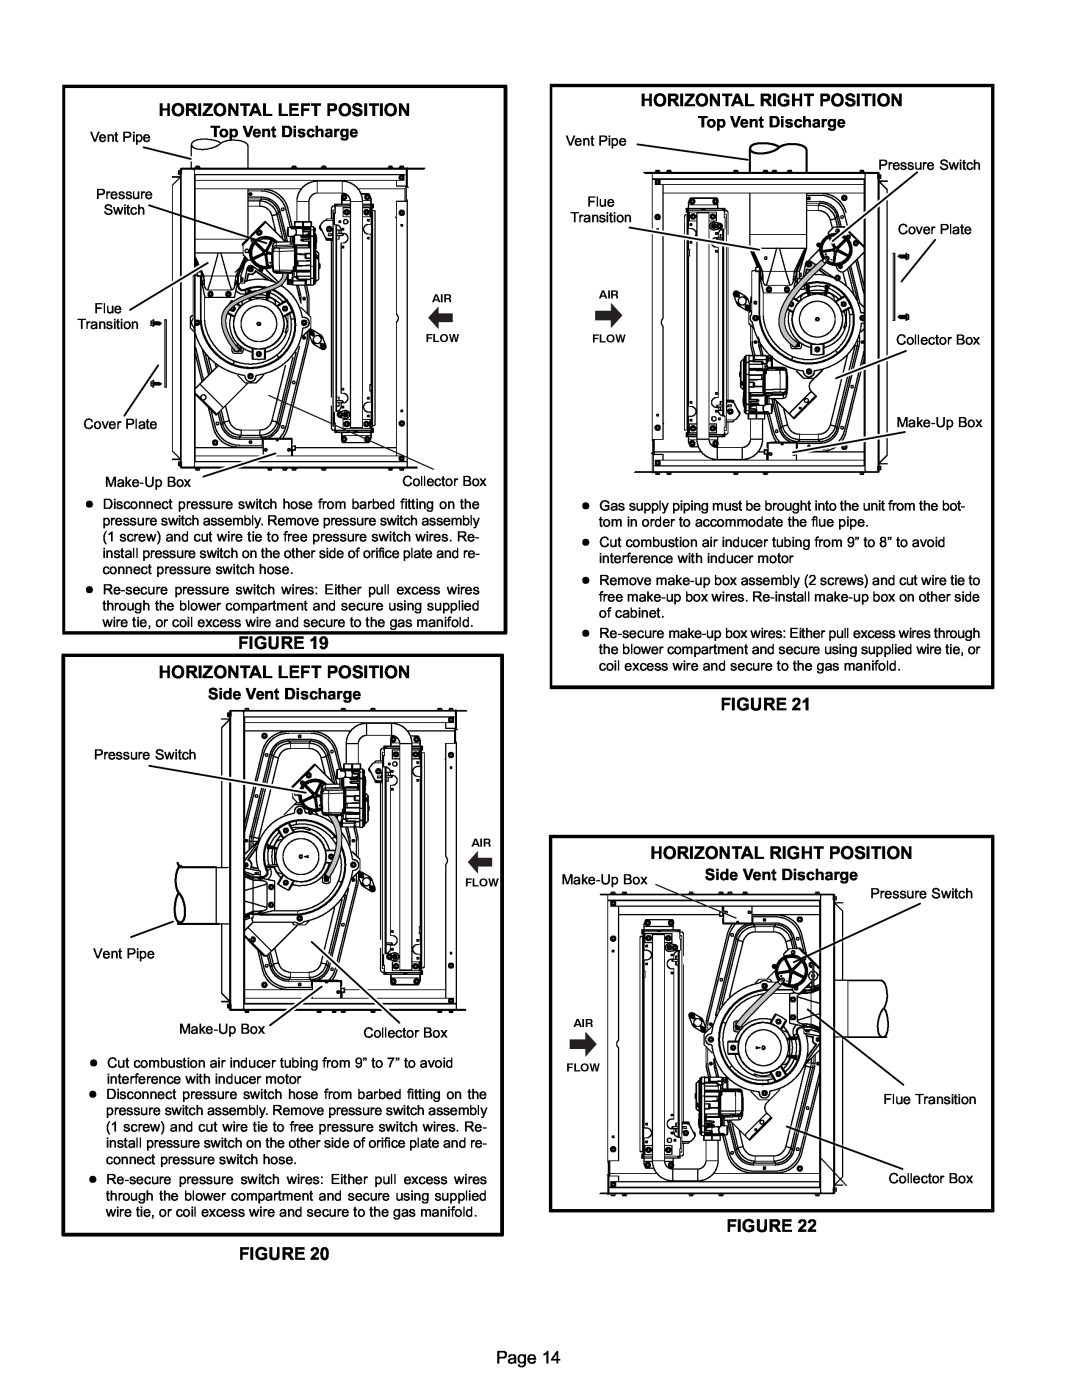 Lennox International Inc Merit Series Gas Furnace Horizontal Left Position, Horizontal Right Position, Page 